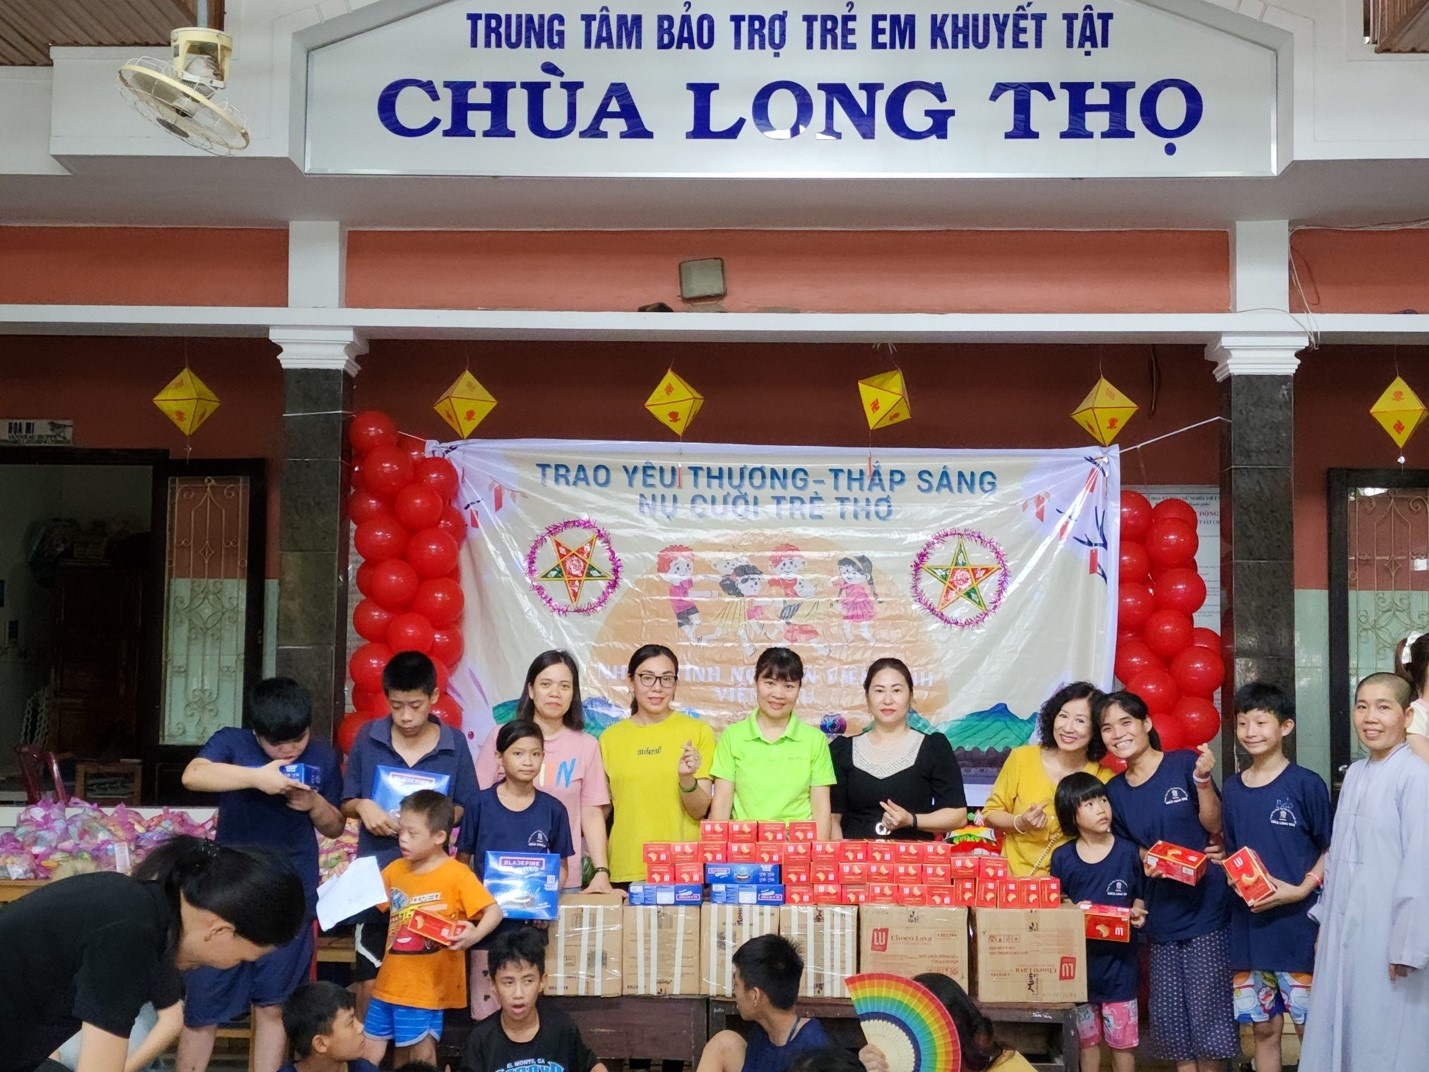 Mondelez Kinh Do donates 27,000 boxes of confectionery via Vietnam Food Bank network